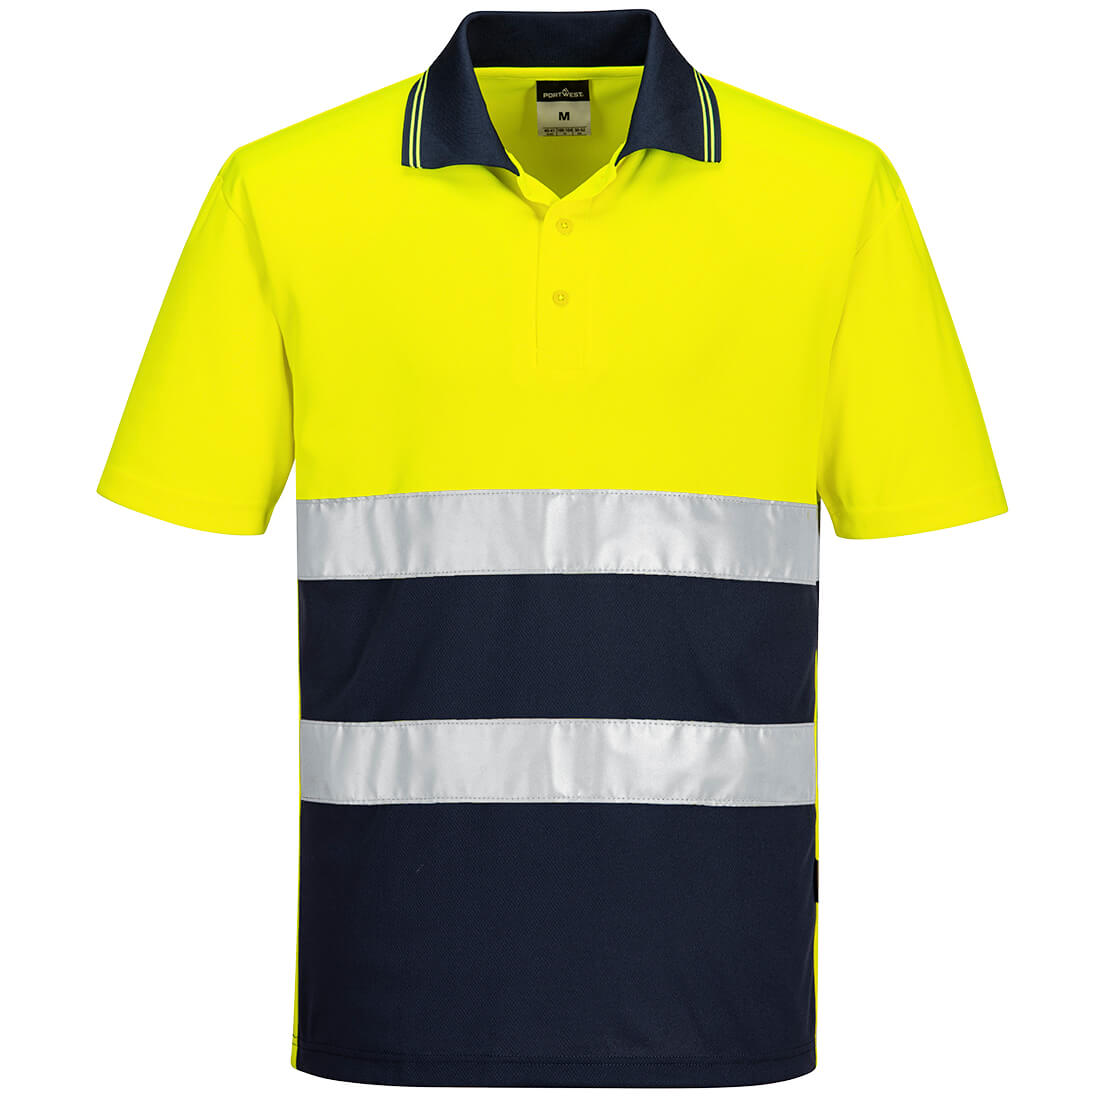 Portwest Hi-Vis Lightweight Contrast Polo Shirt S/S